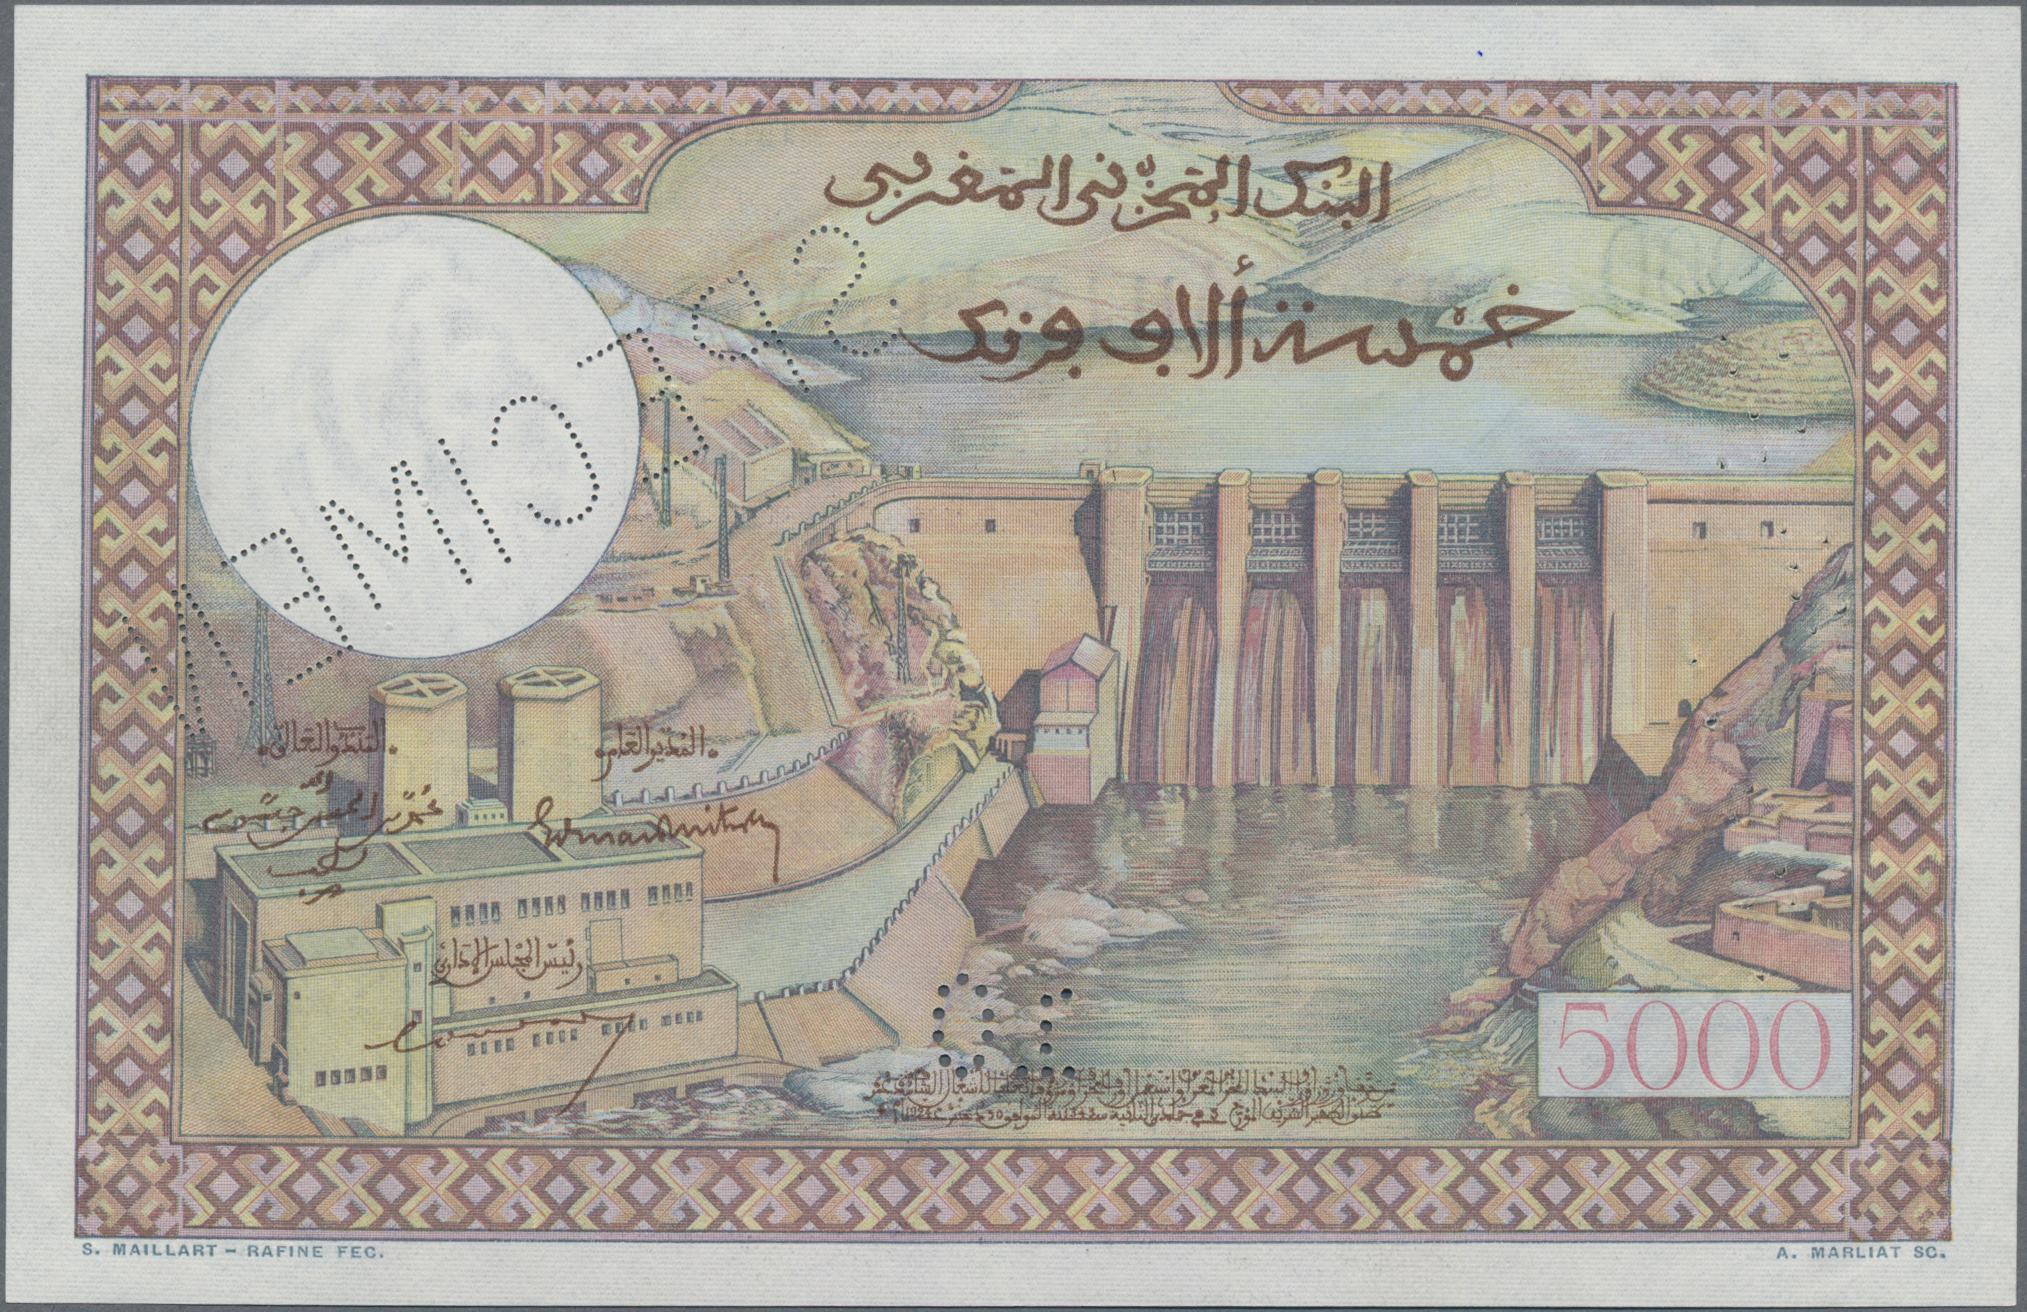 Lot 00456 - Morocco / Marokko  | Banknoten  -  Auktionshaus Christoph Gärtner GmbH & Co. KG 56th AUCTION - Day 1